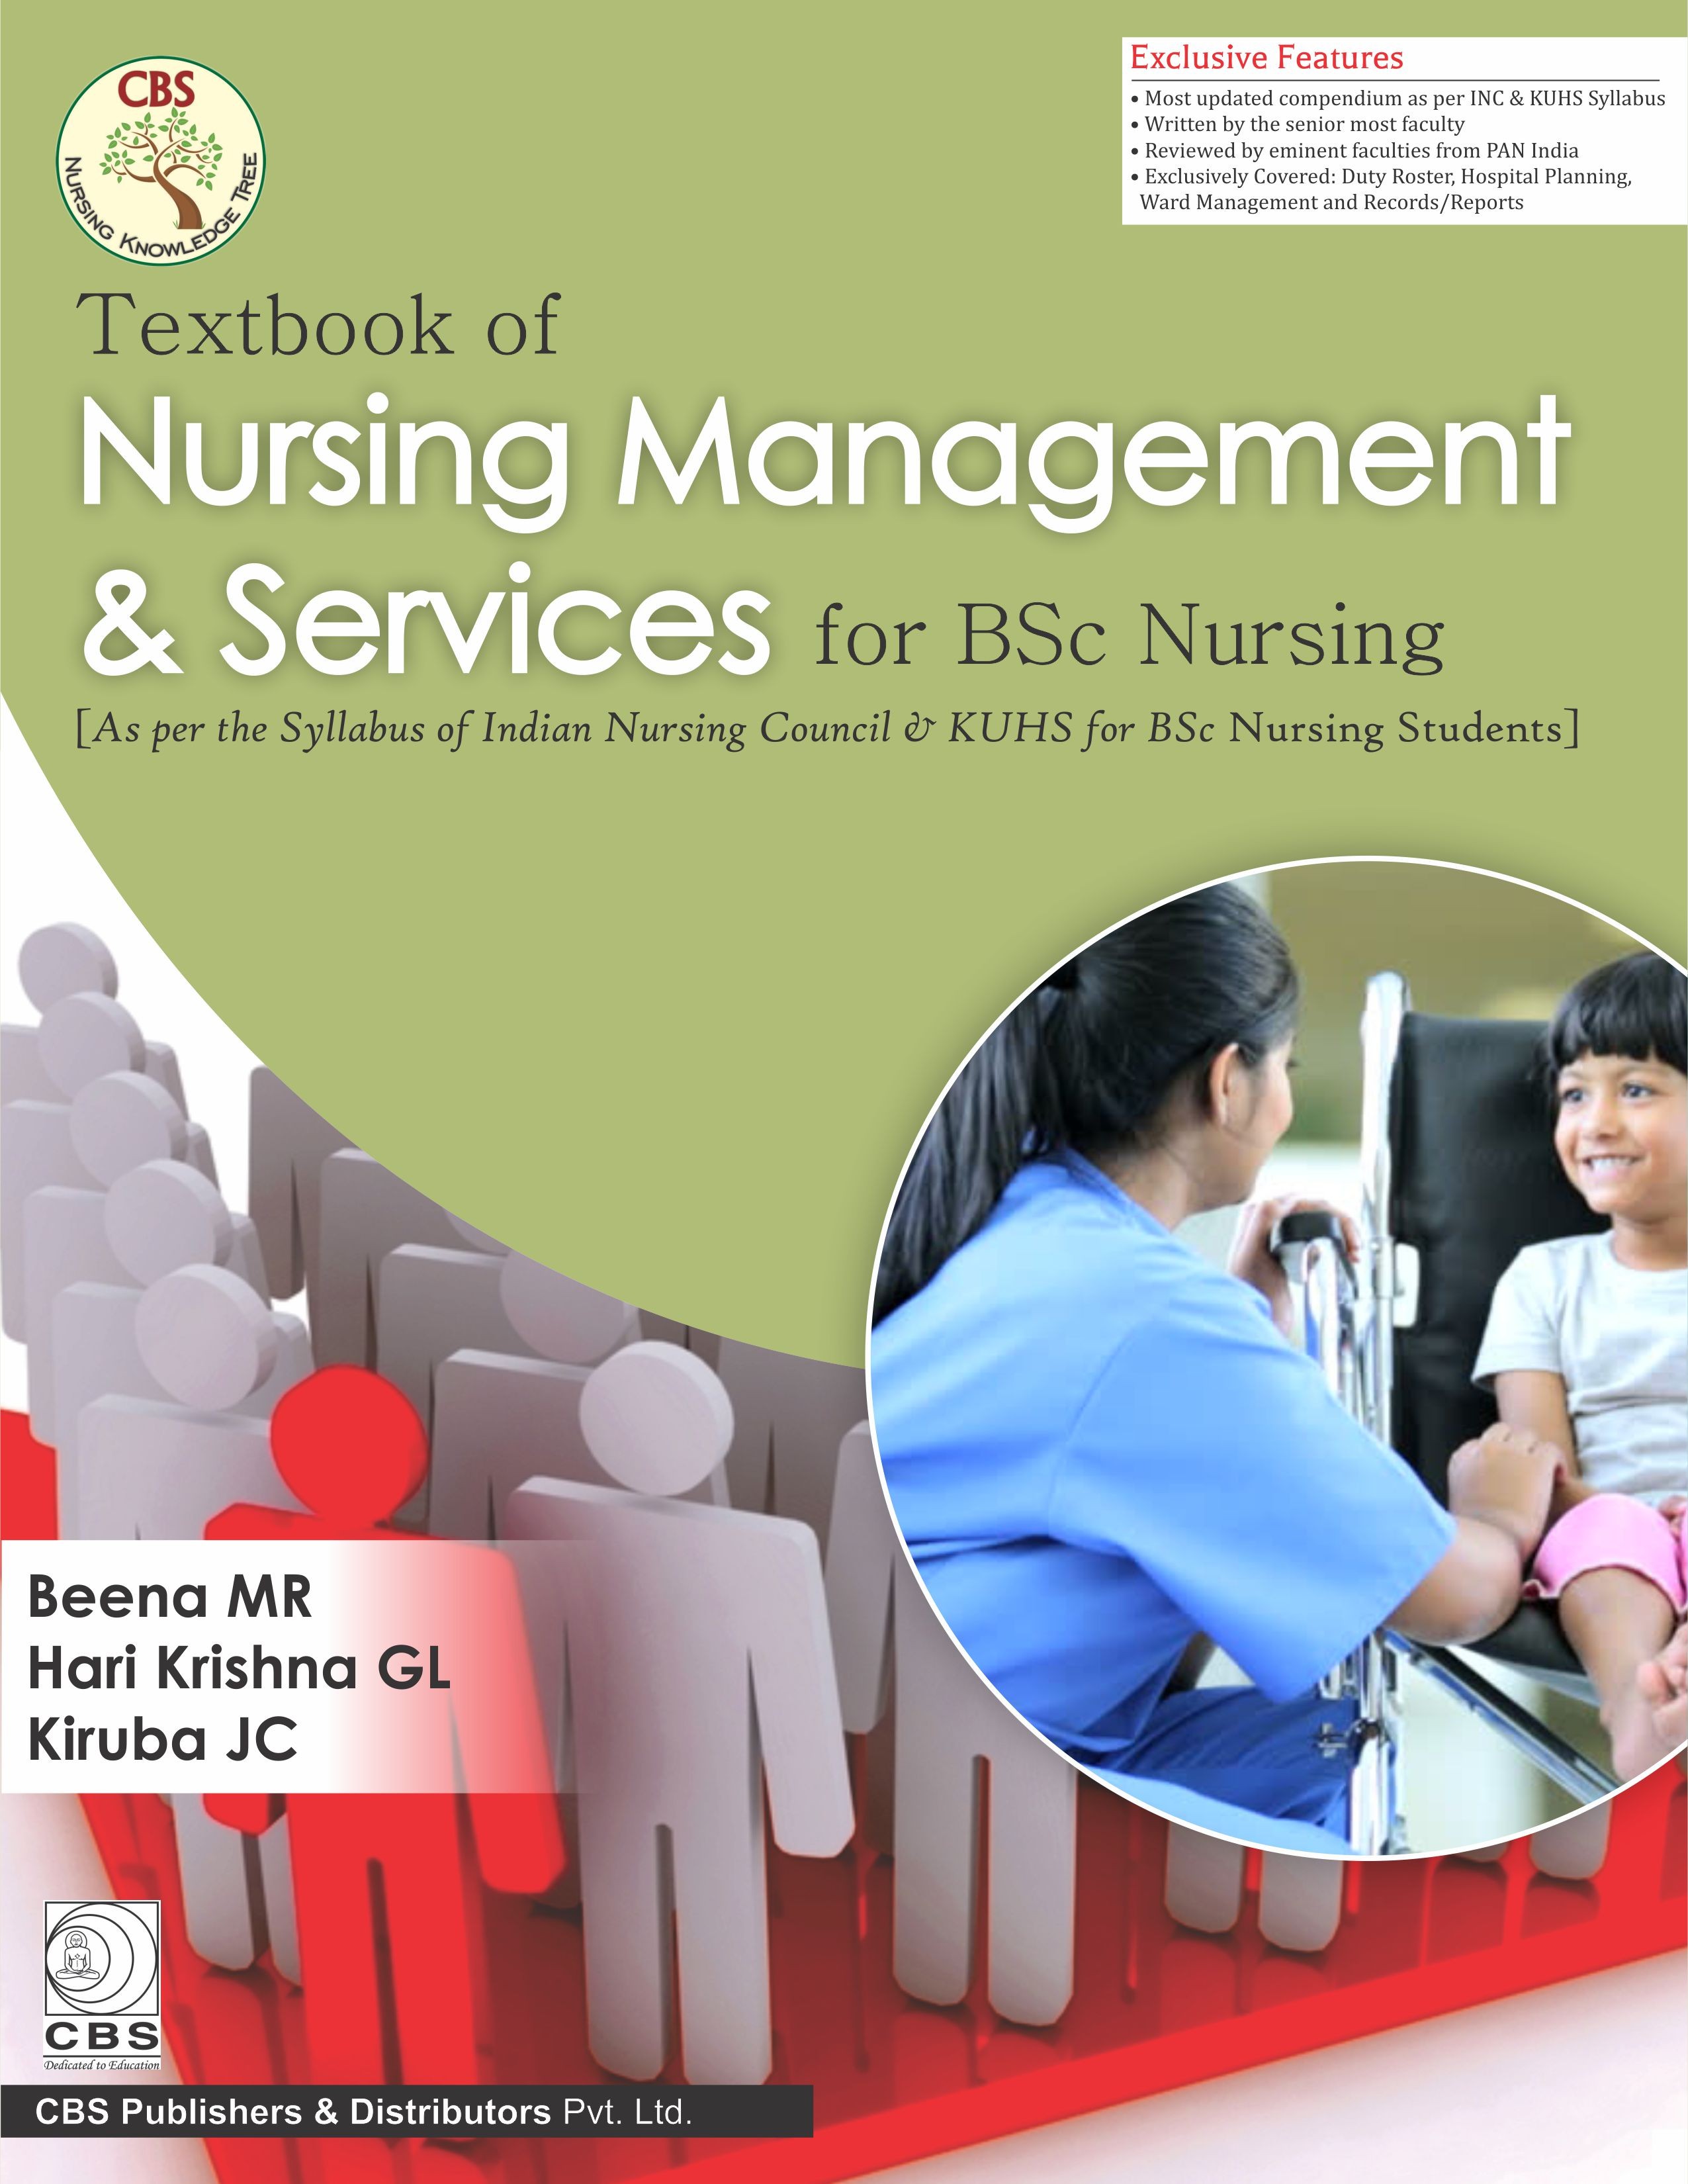 Textbook of Nursing Management & Services for Bsc Nursing